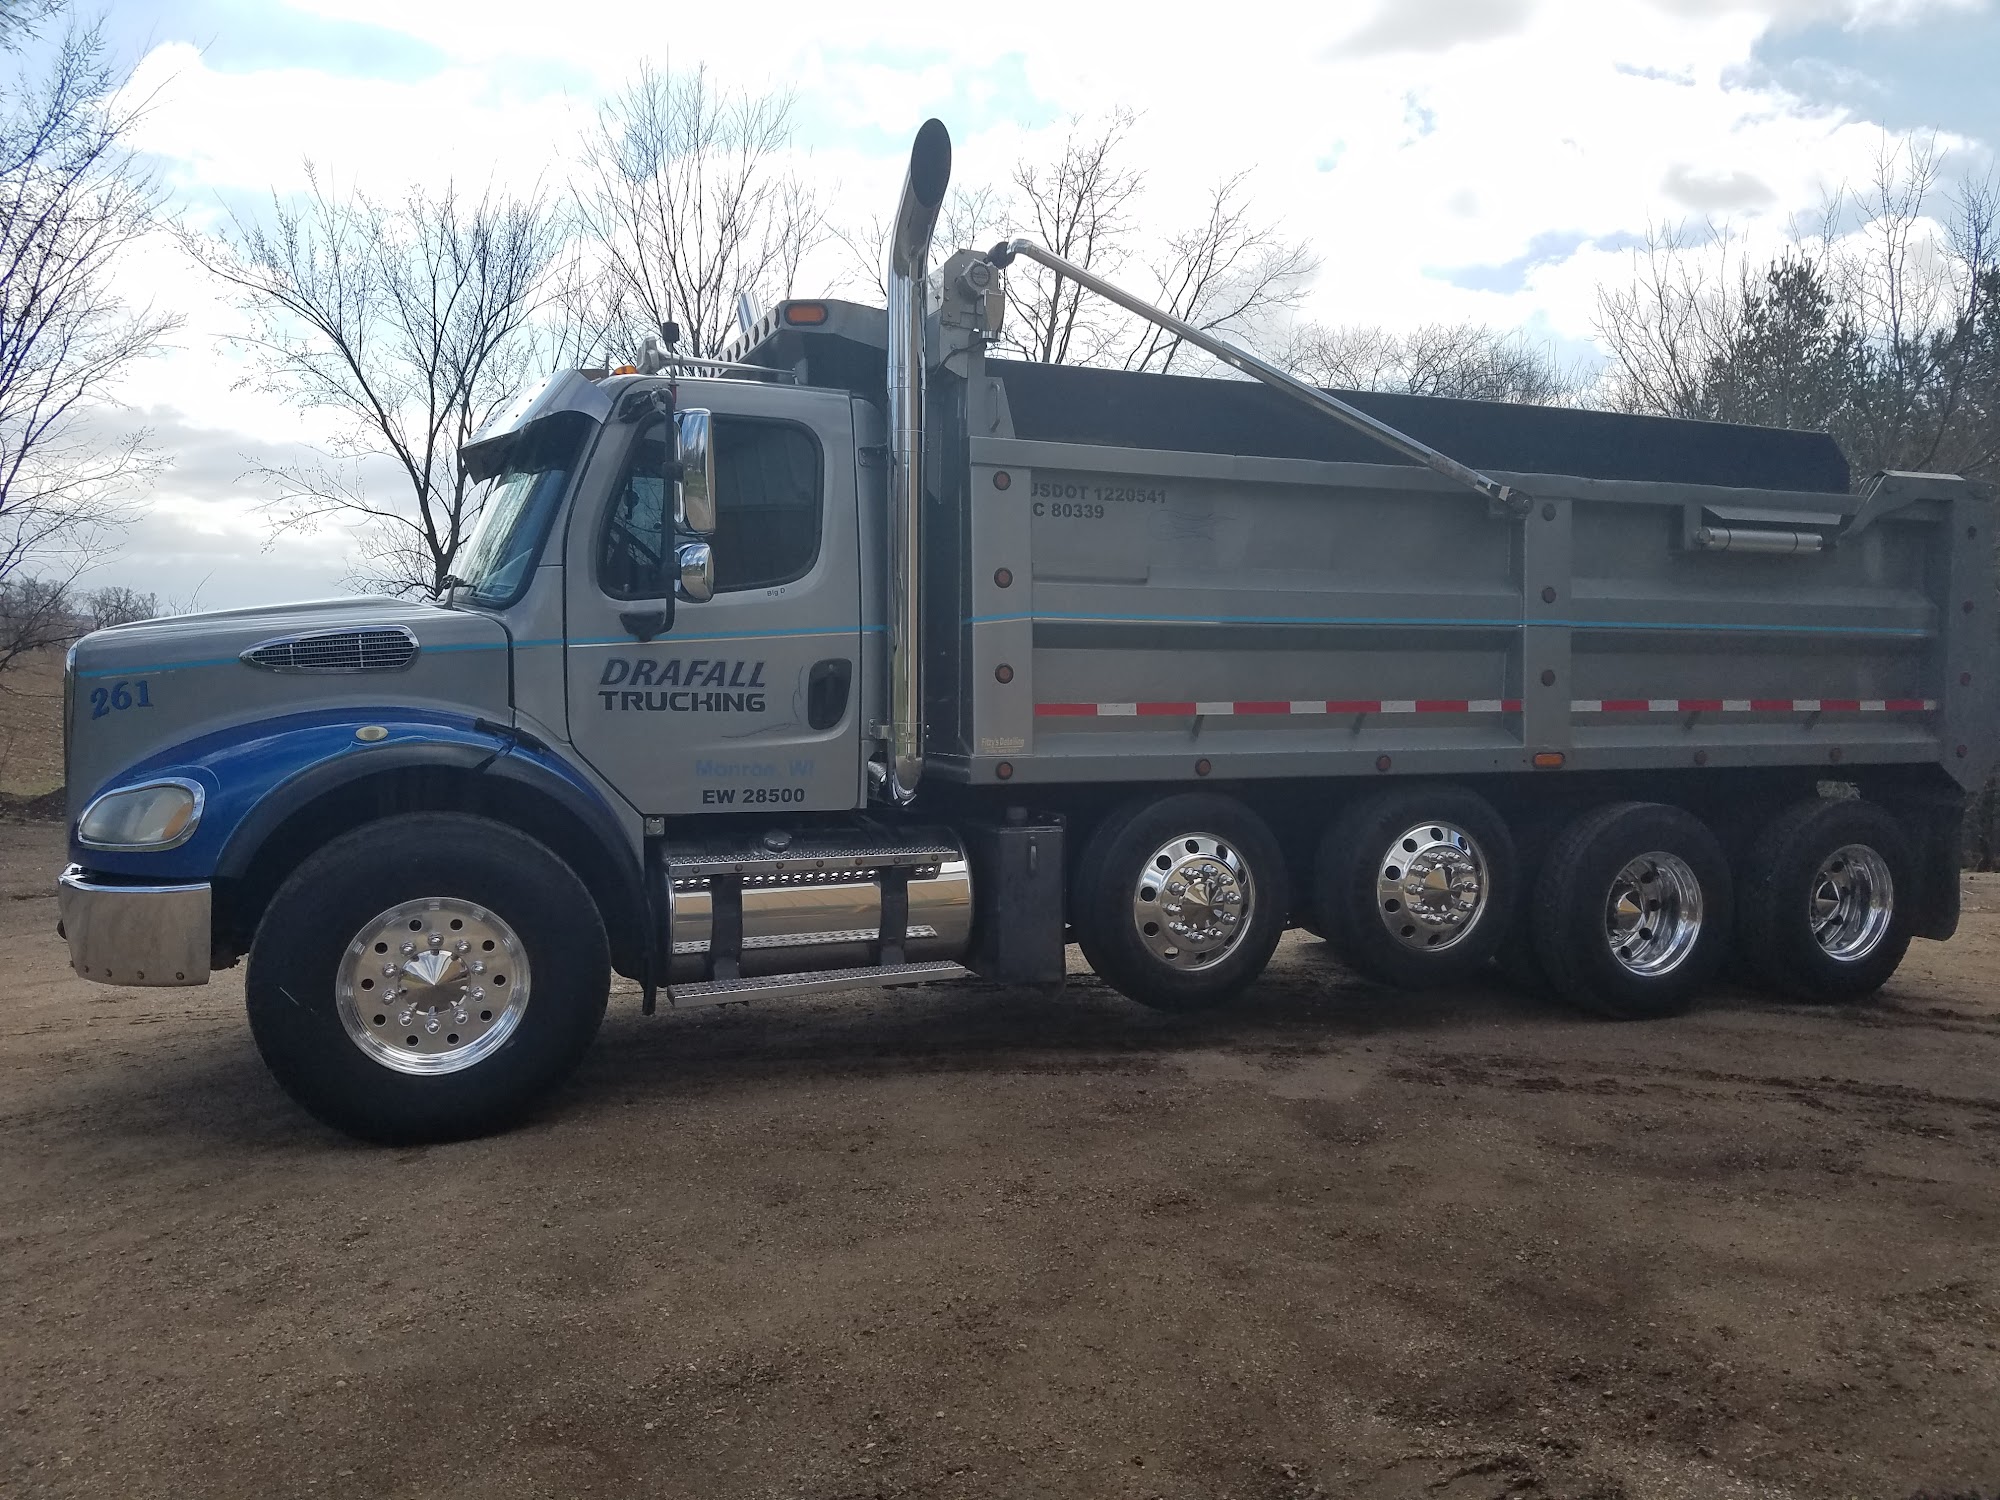 Drafall Trucking & Snow Removal N1649 Cty K, Monroe Wisconsin 53566